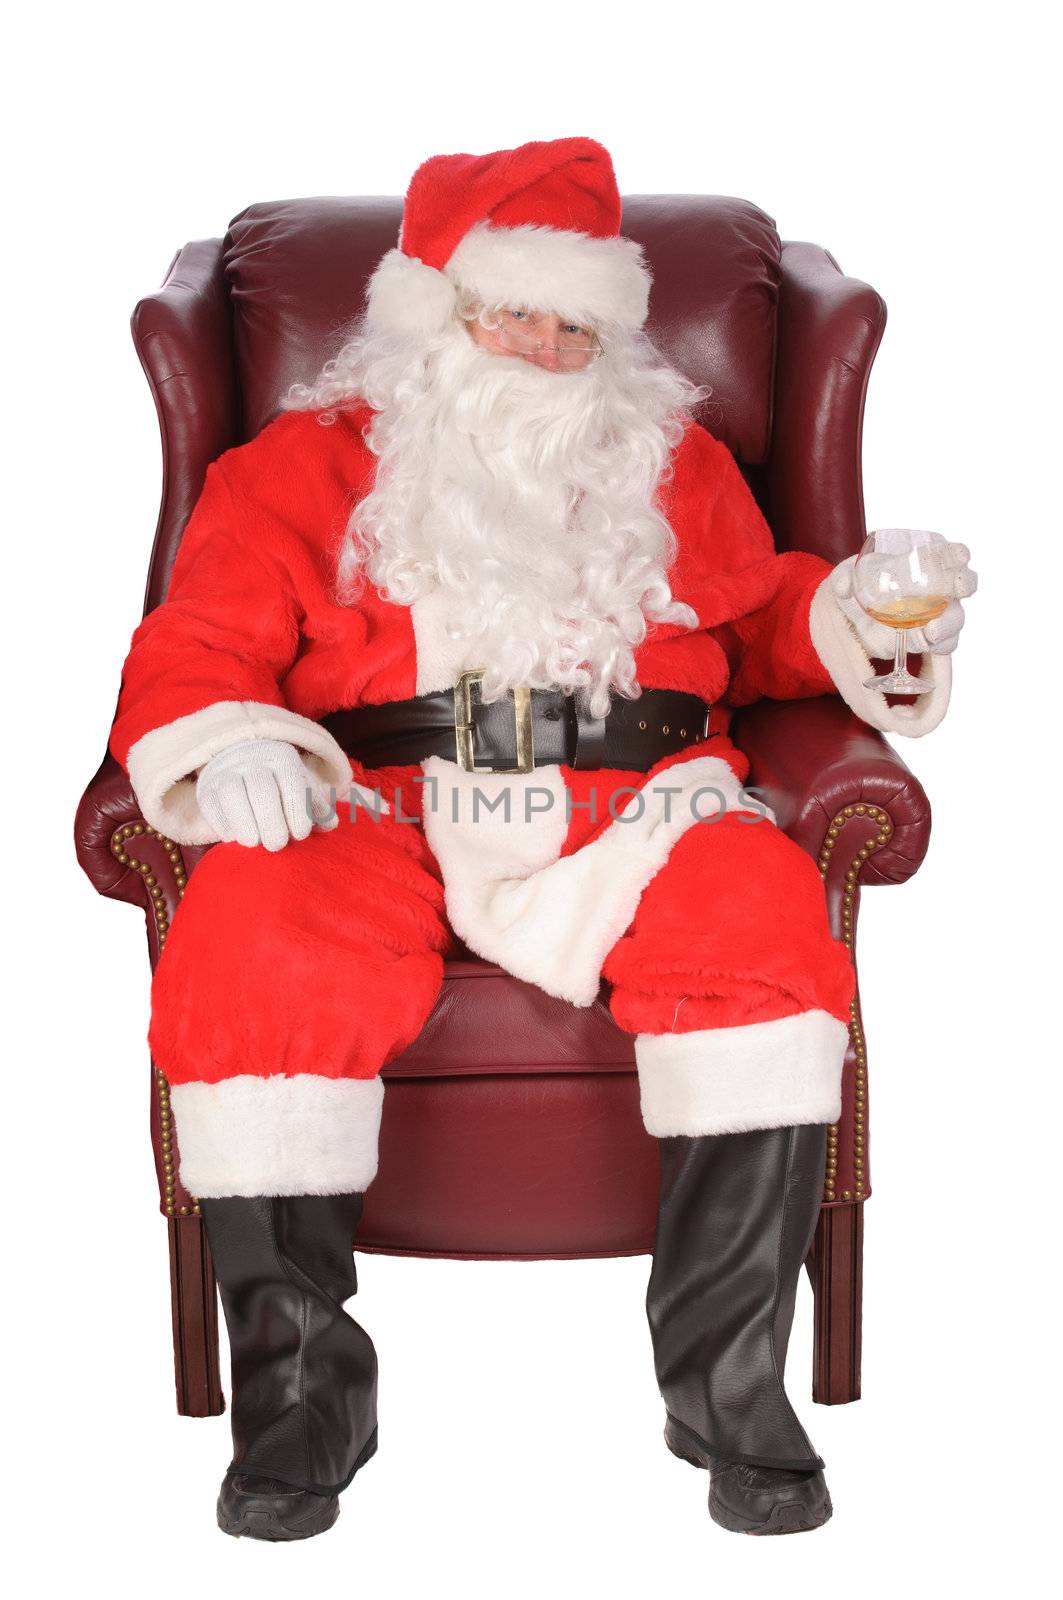 Santa enjoying a rest by jeffbanke